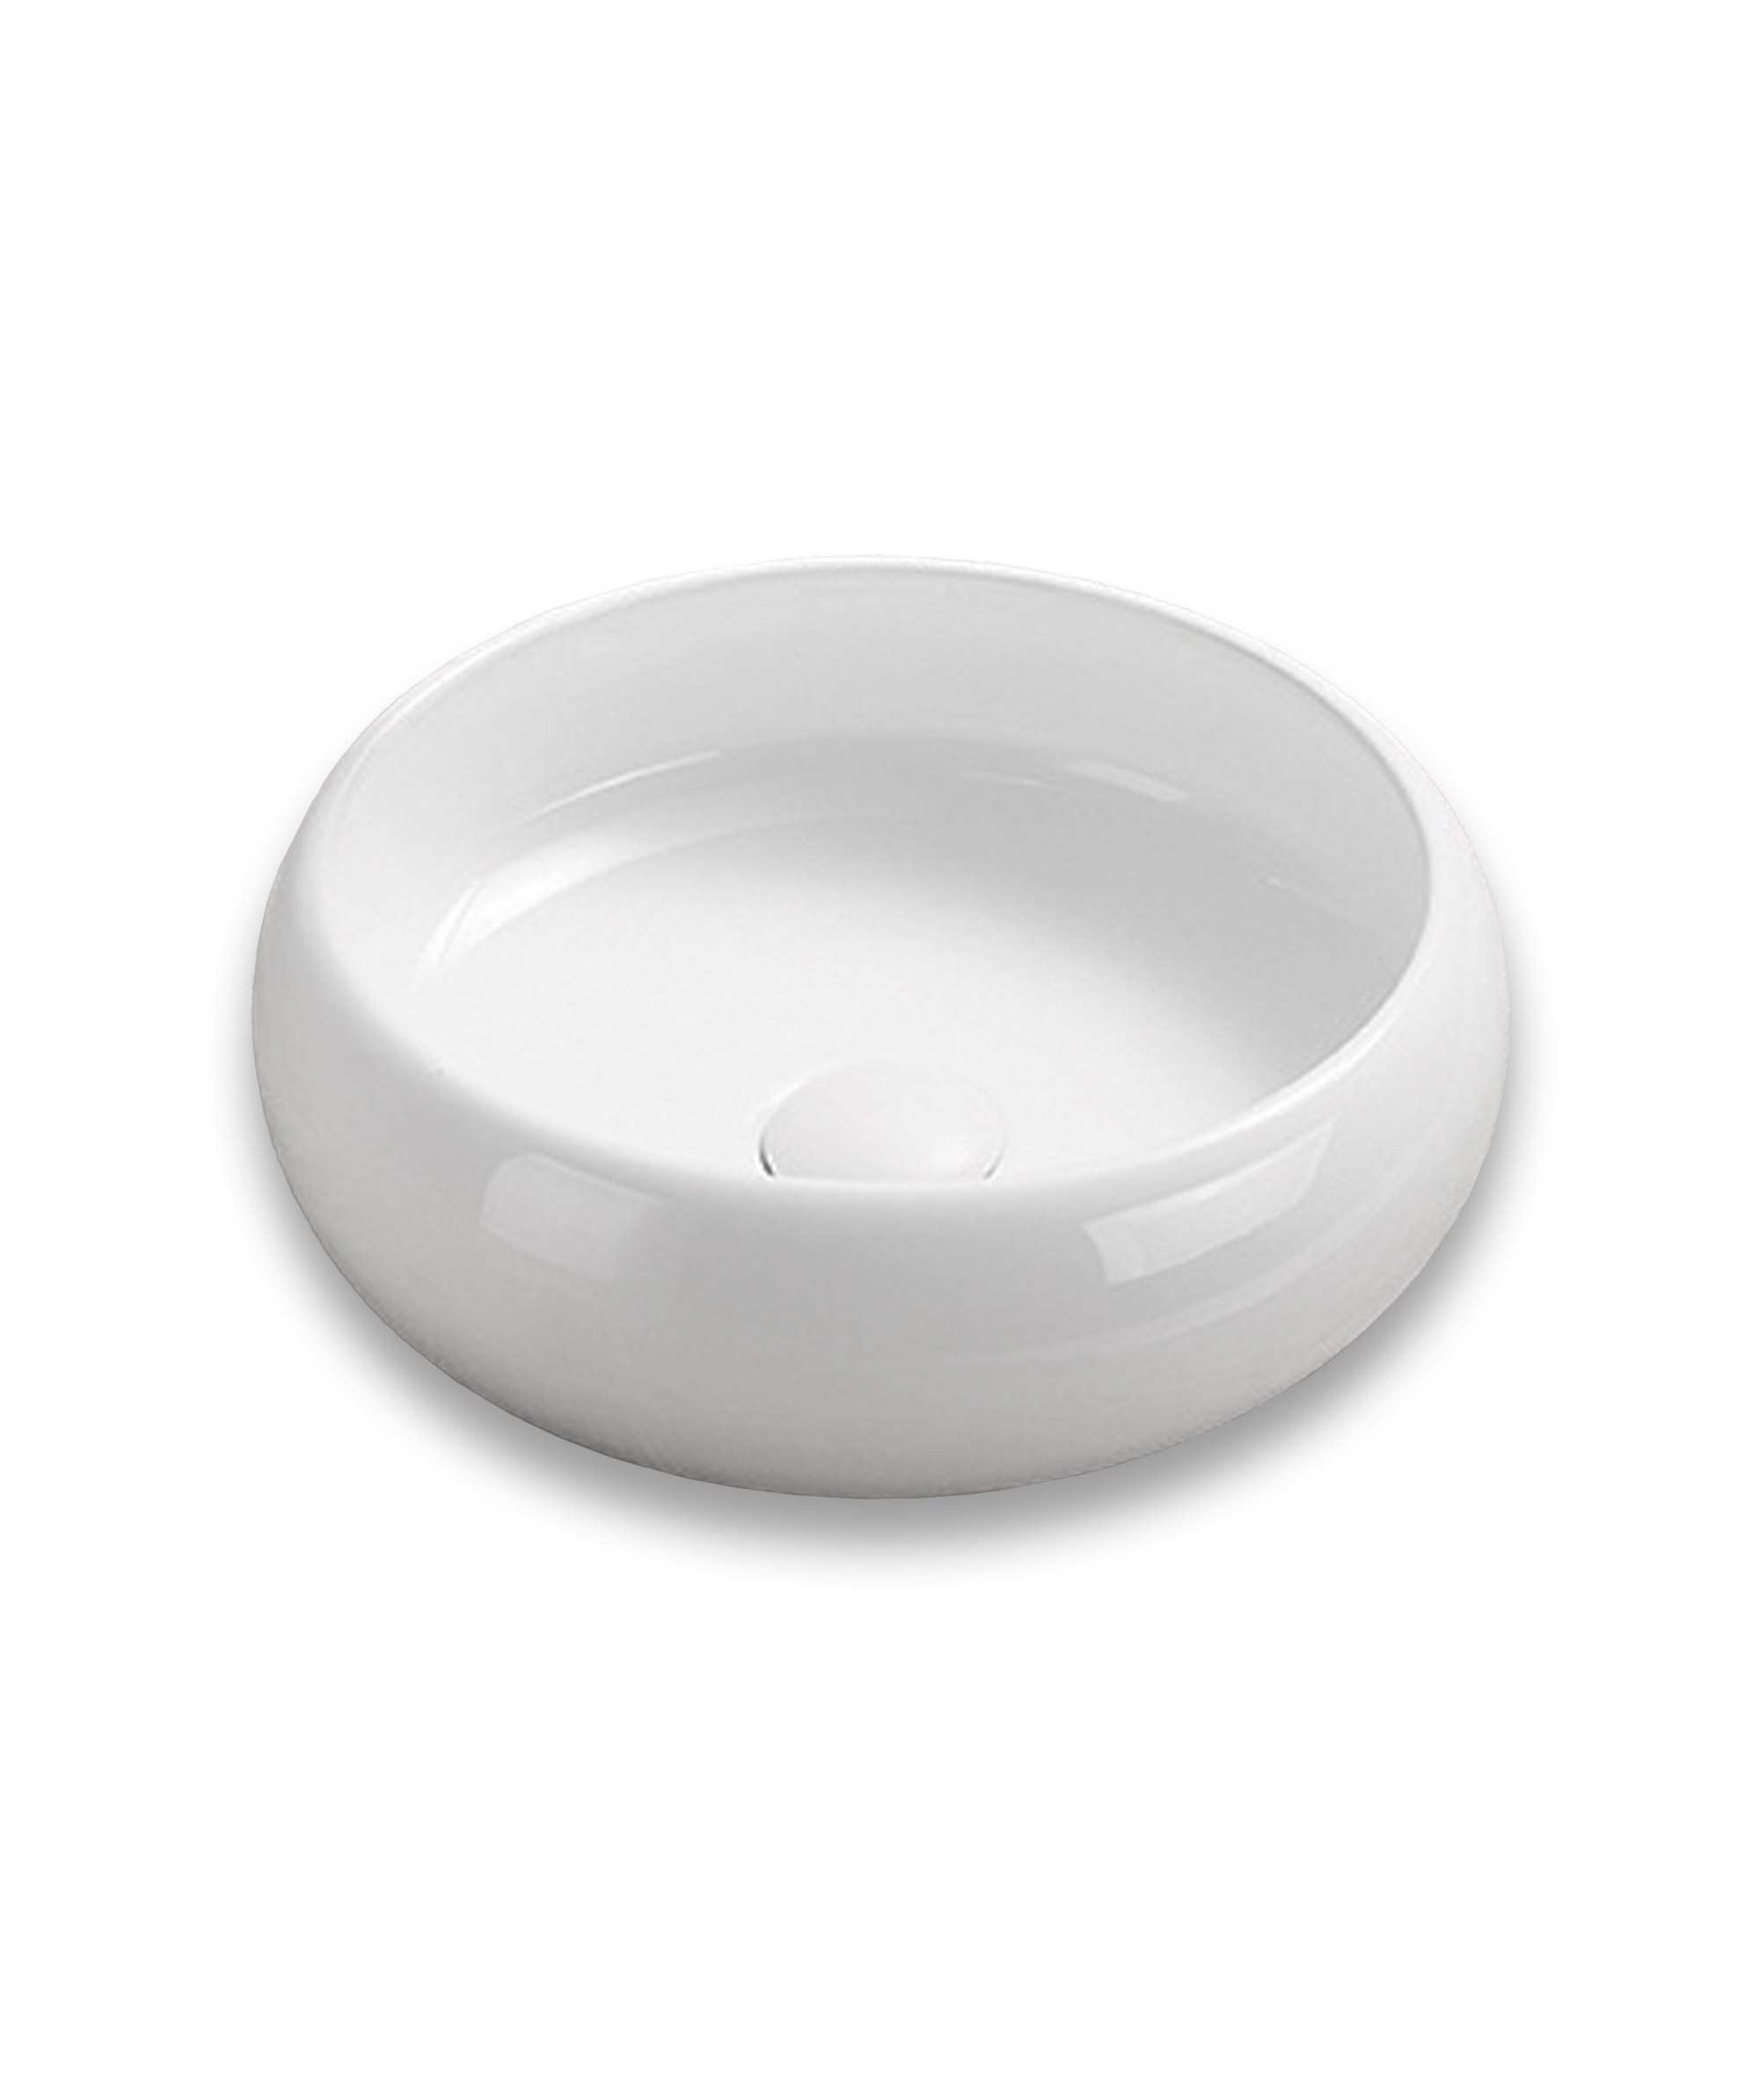 Arko 361 ceramic basin - White Gloss